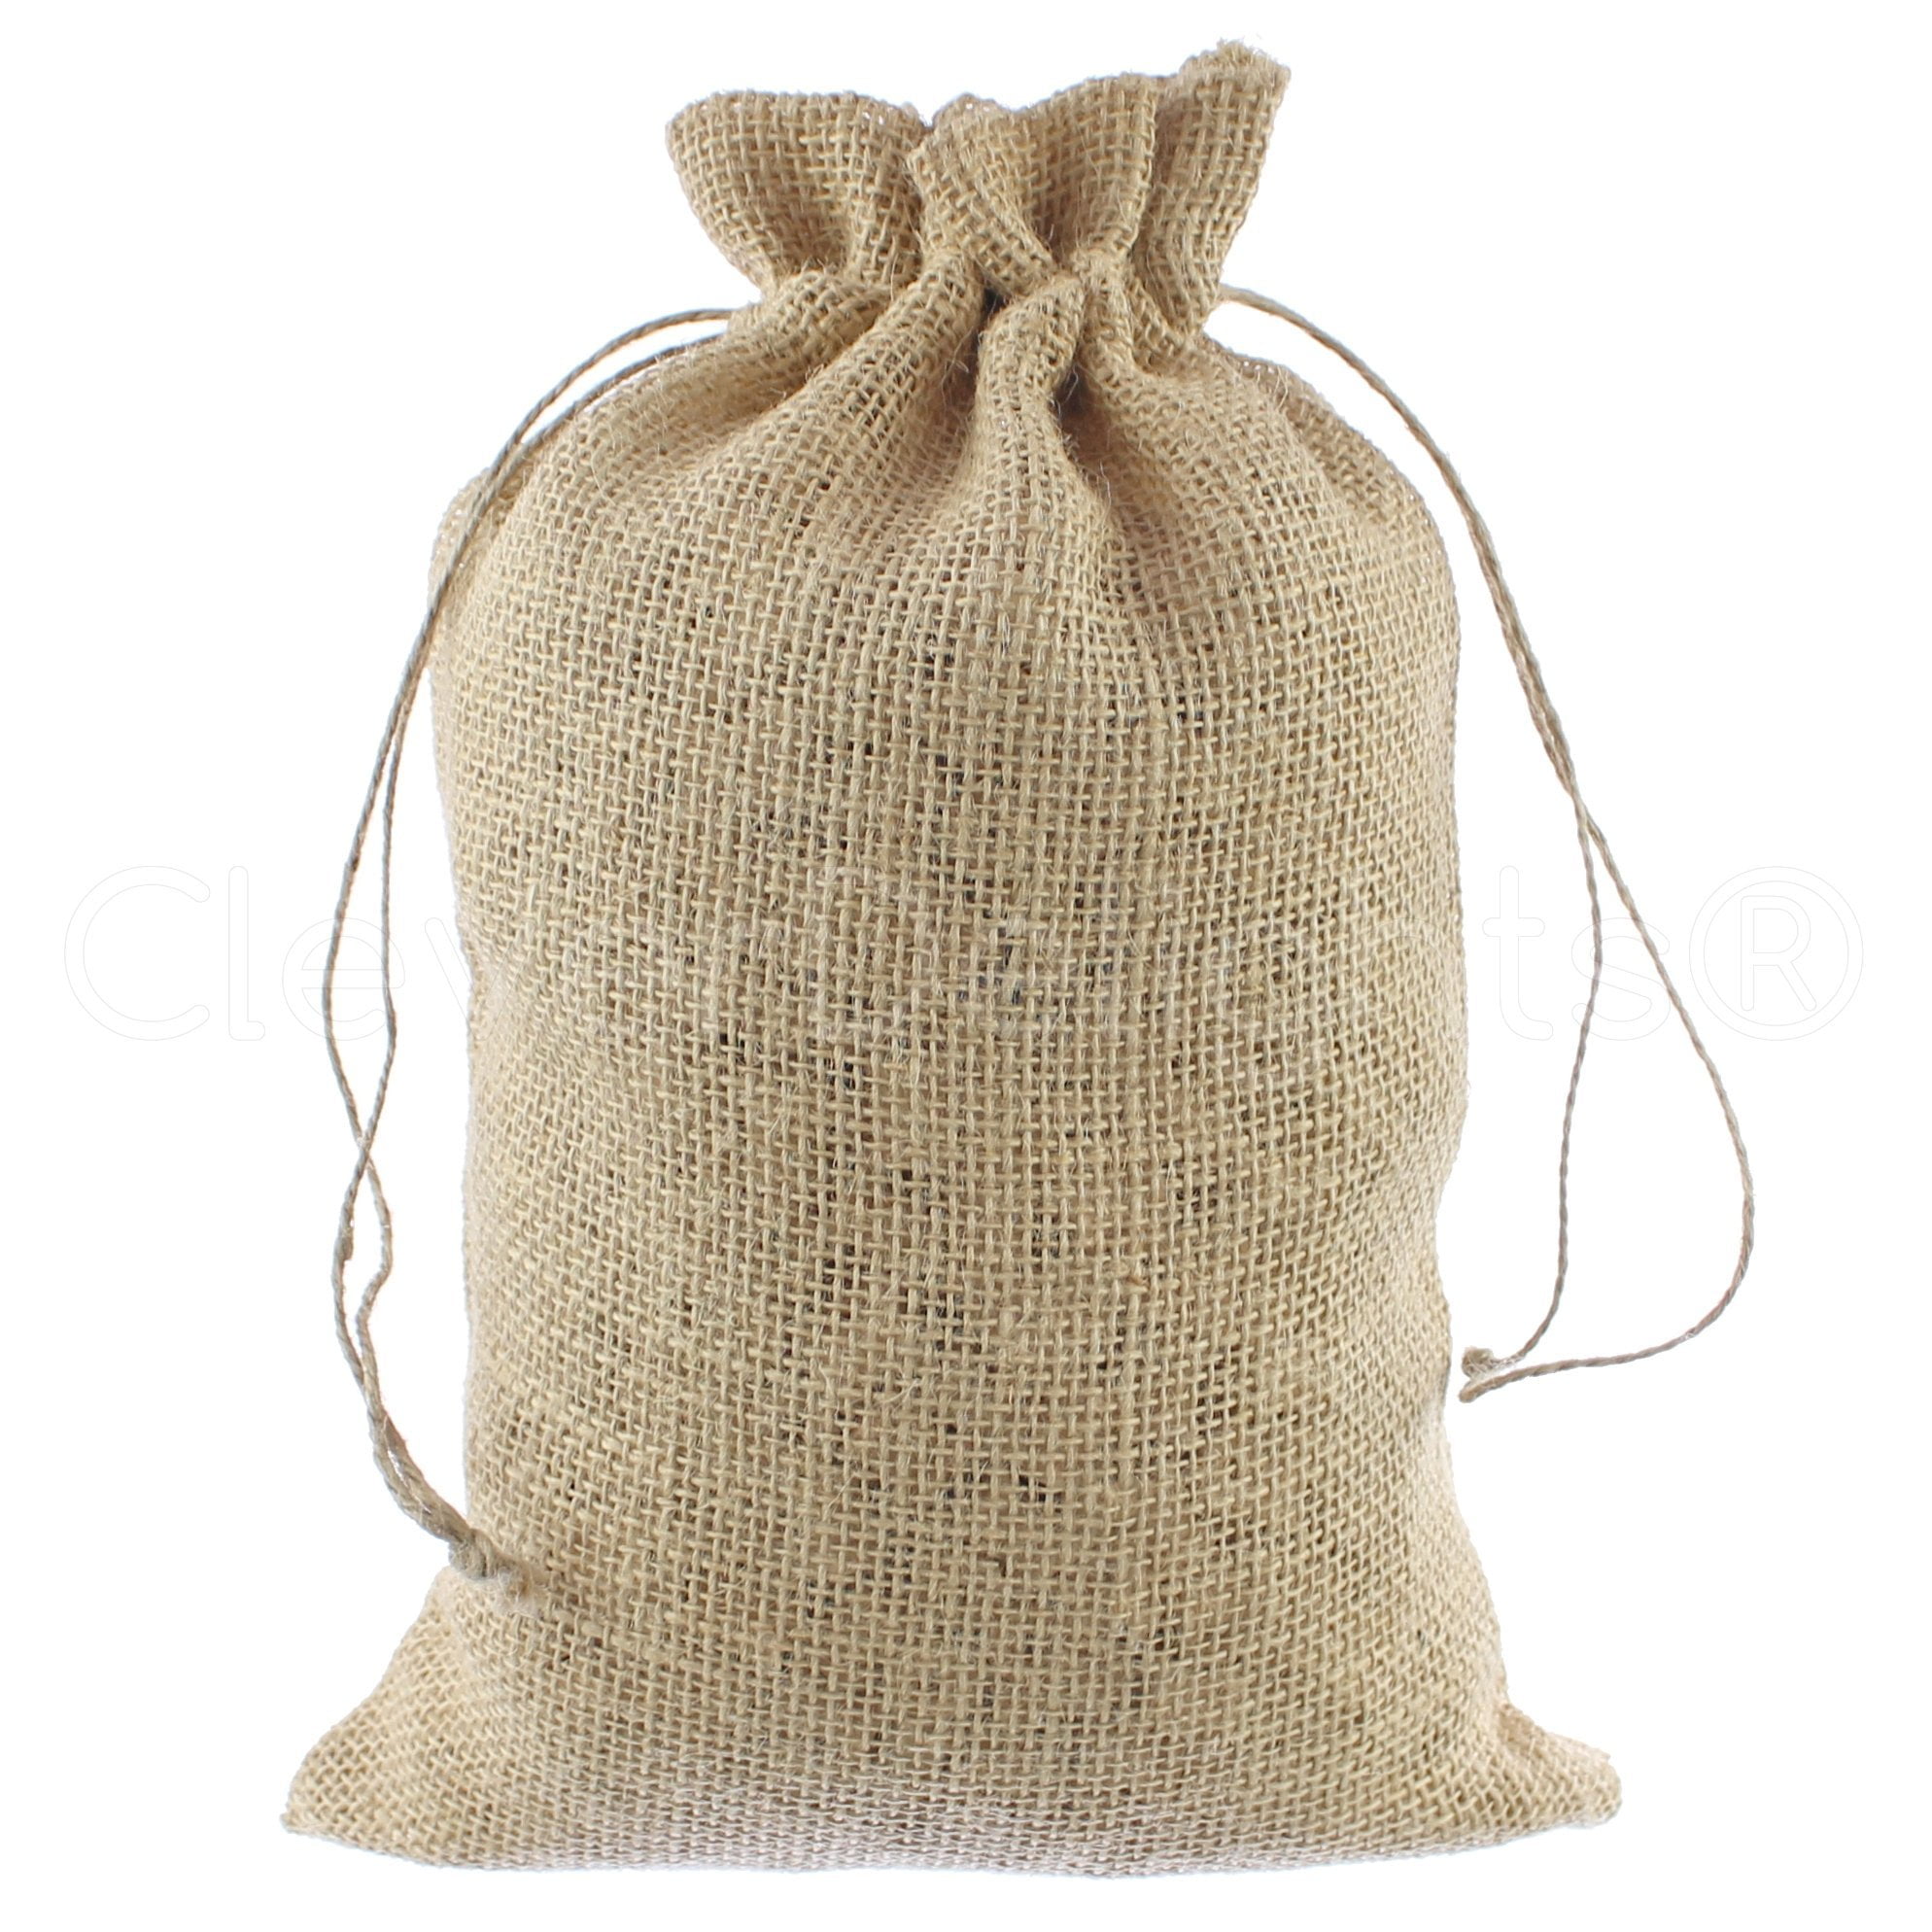 2x3 Sack Favor Bag 100 Burlap Bags with Natural Jute Drawstring 2" x 3" 